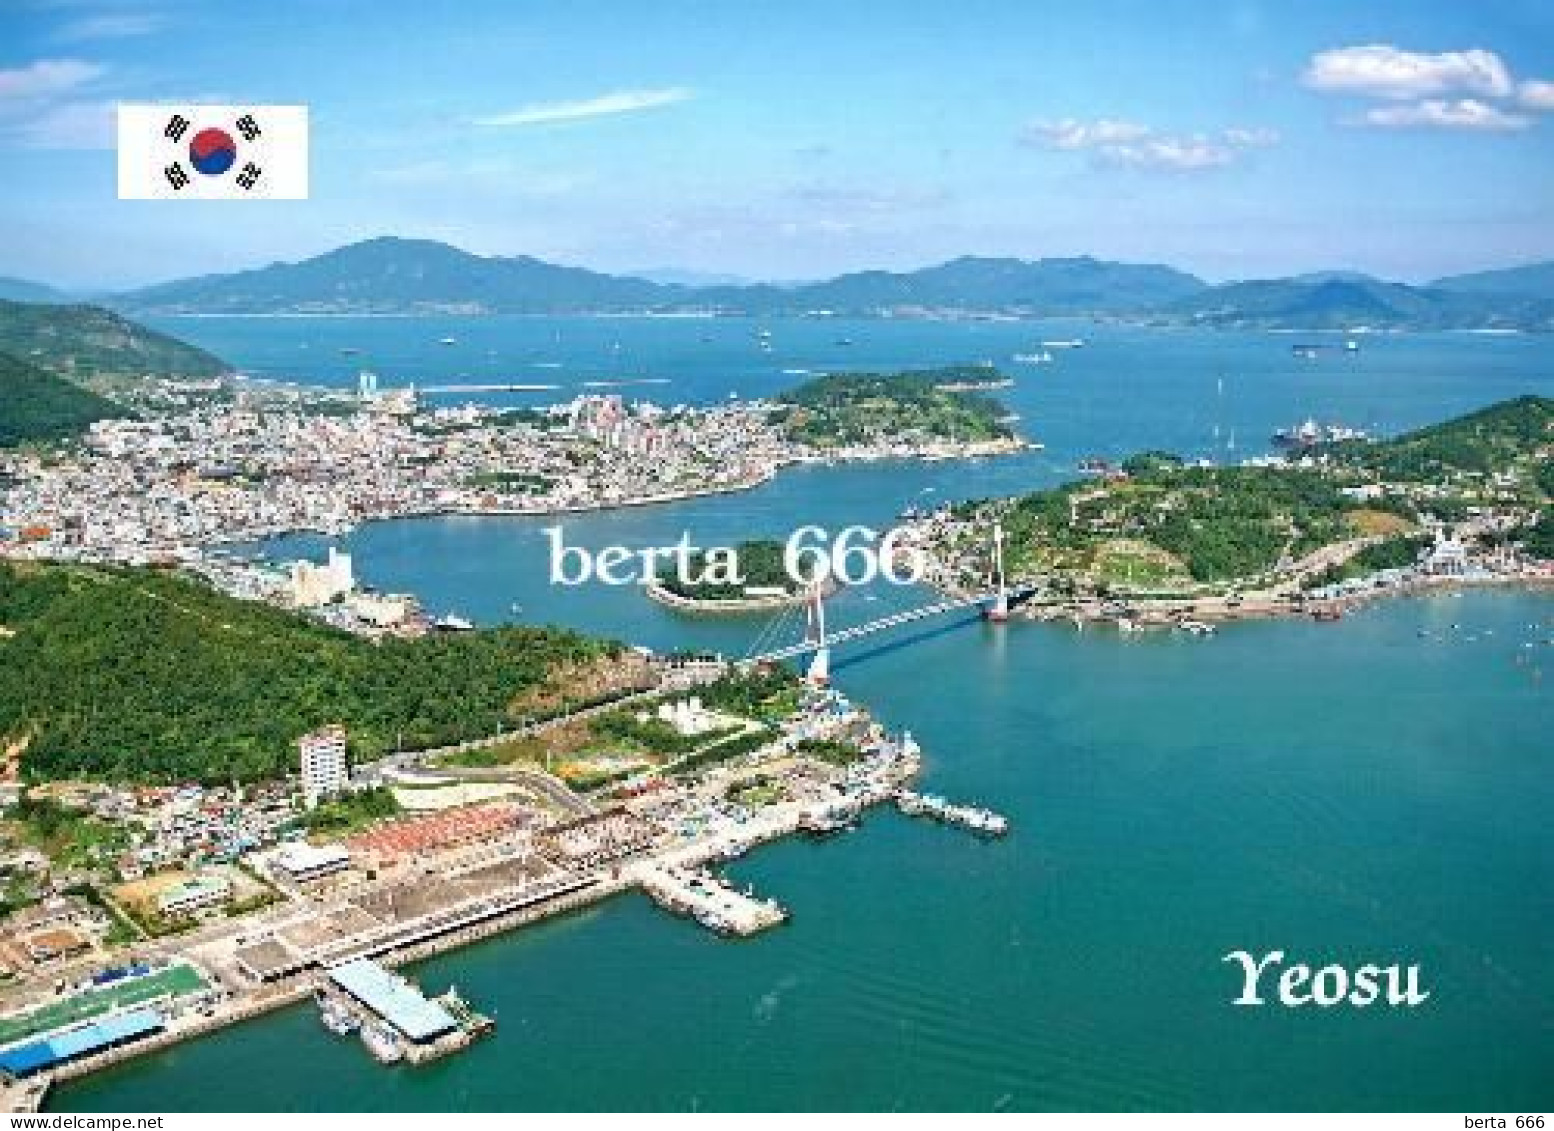 South Korea Yeosu Aerial View New Postcard - Korea, South